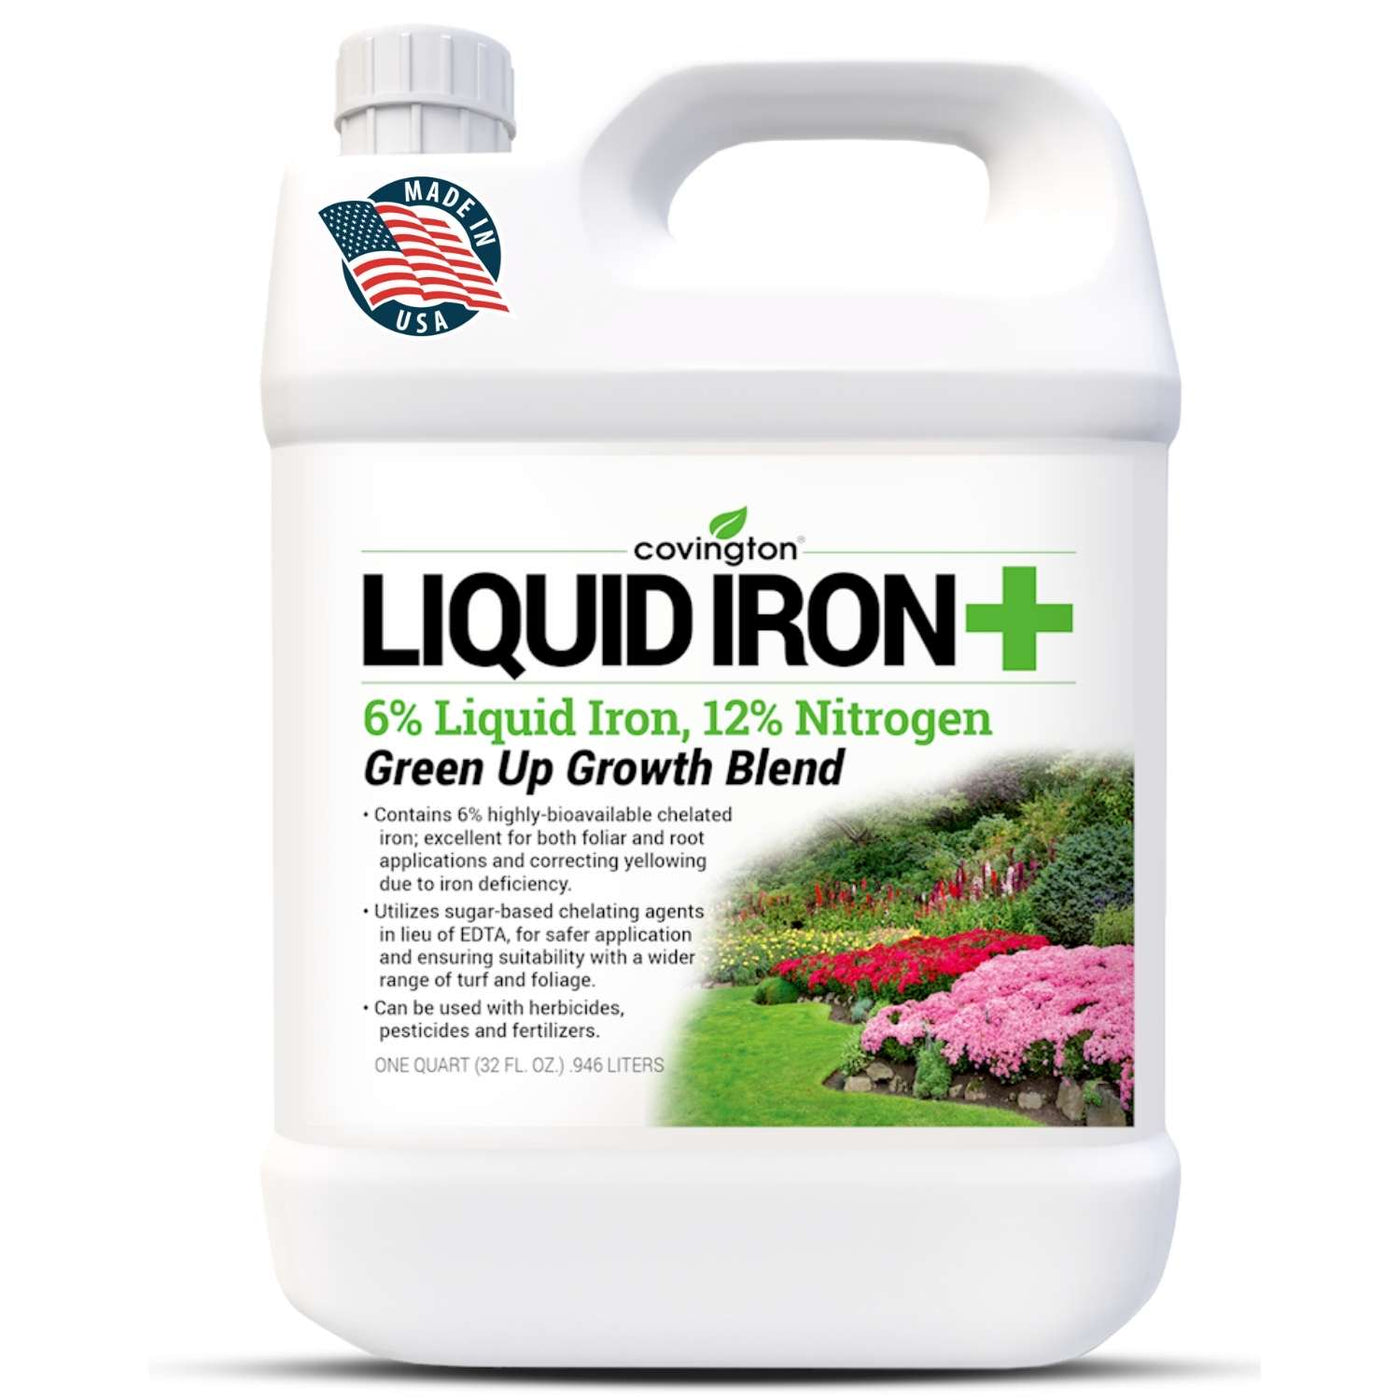 liquid iron for lawns